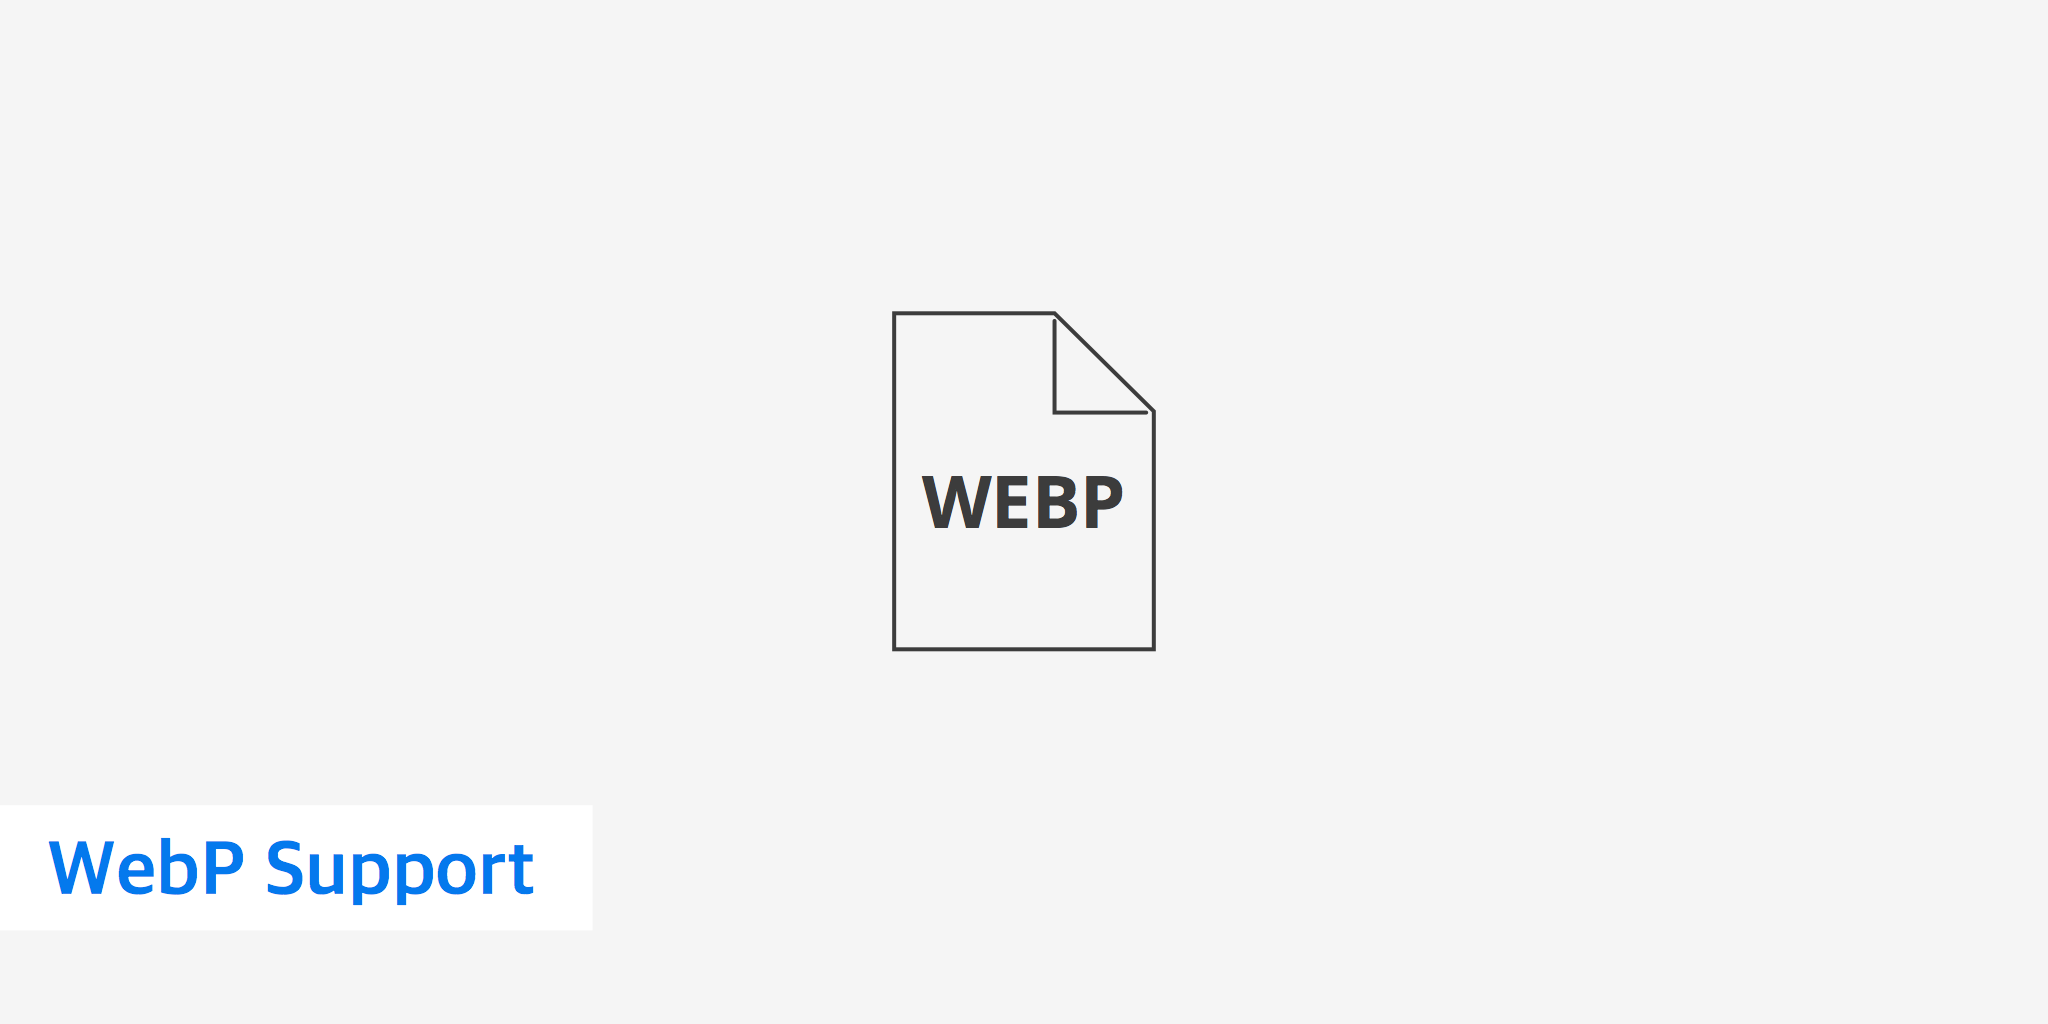 WebP Support